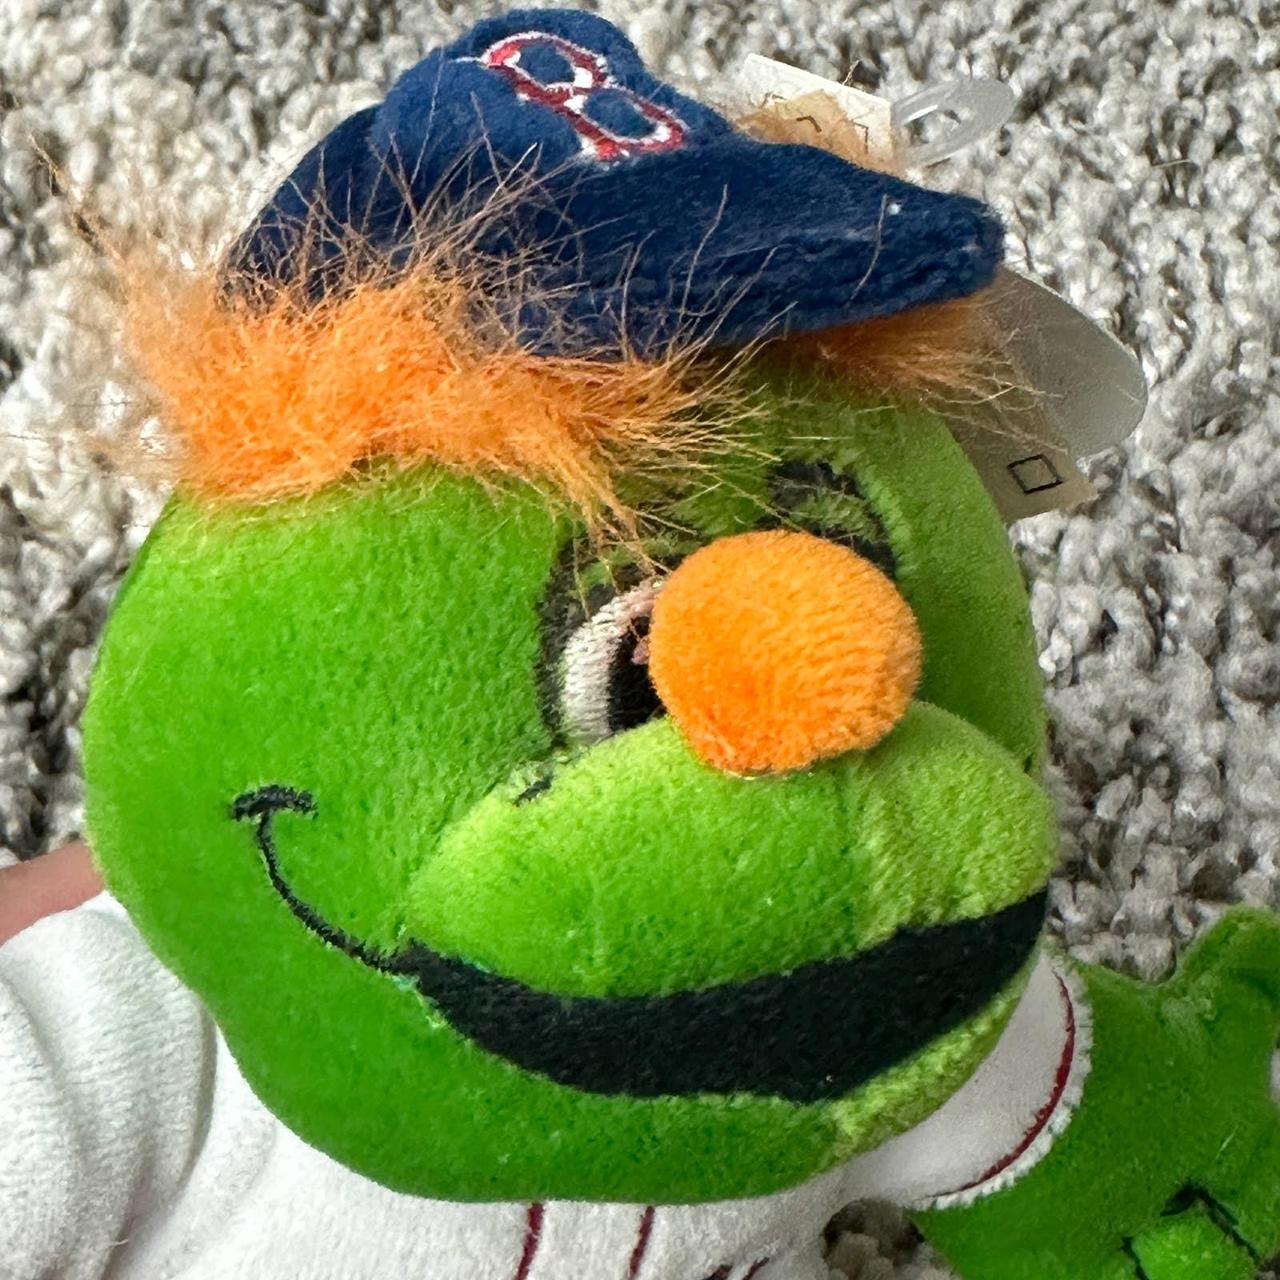 NWT Wally the Green Monster Red Sox Baseball Plush - Depop